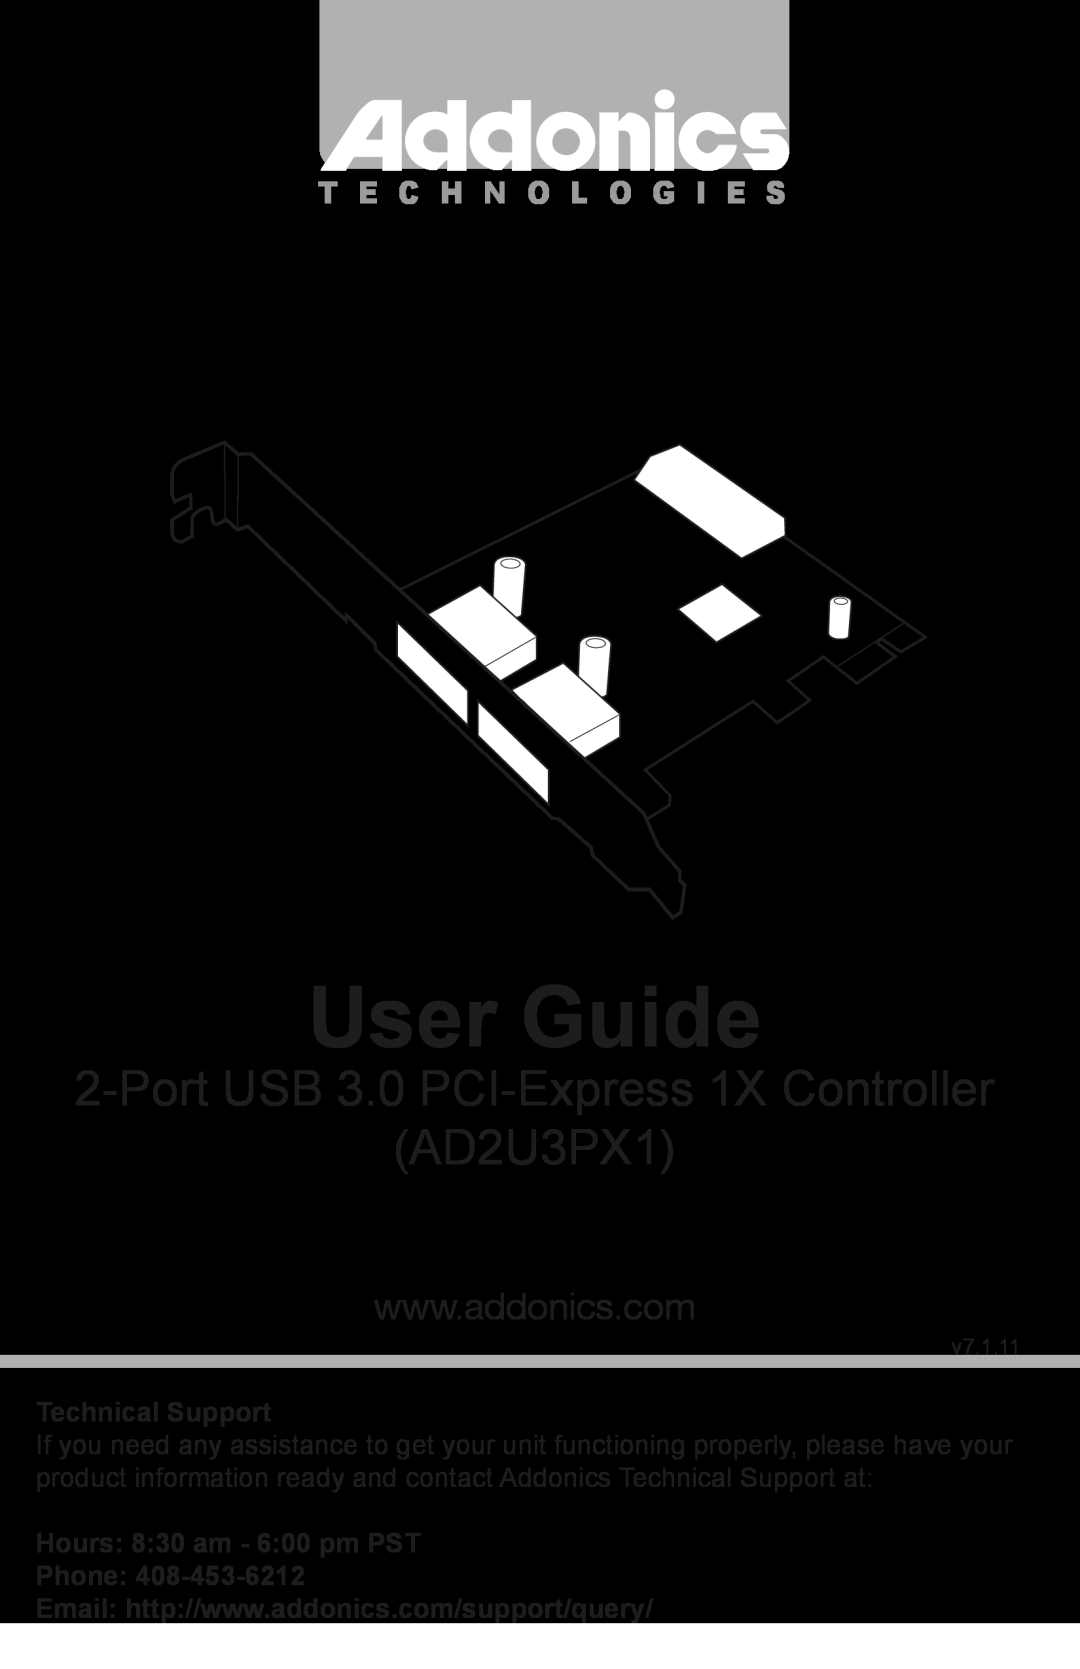 Addonics Technologies manual User Guide, Port USB 3.0 PCI-Express 1X Controller AD2U3PX1, T E C H N O L O G I E S 